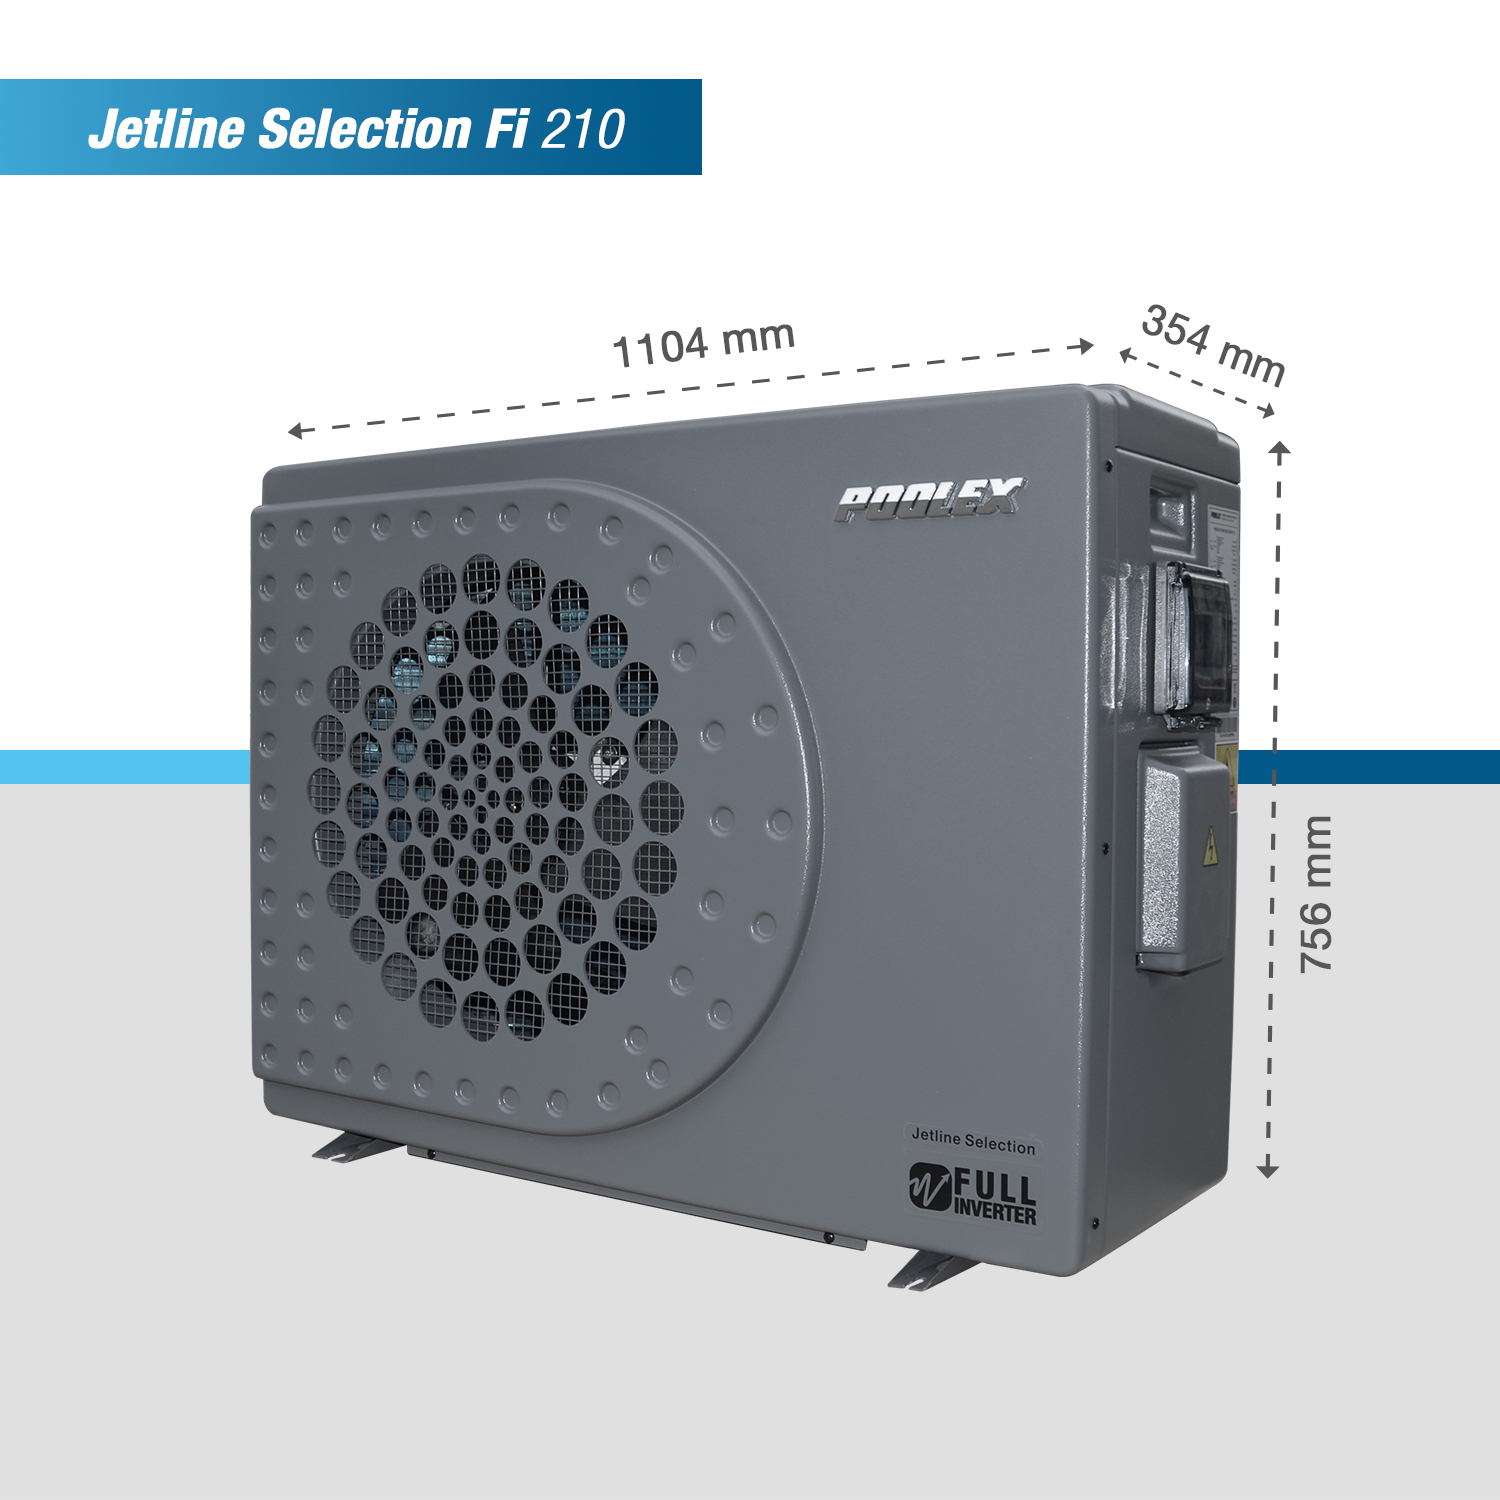 Jetline Selection Fi 210